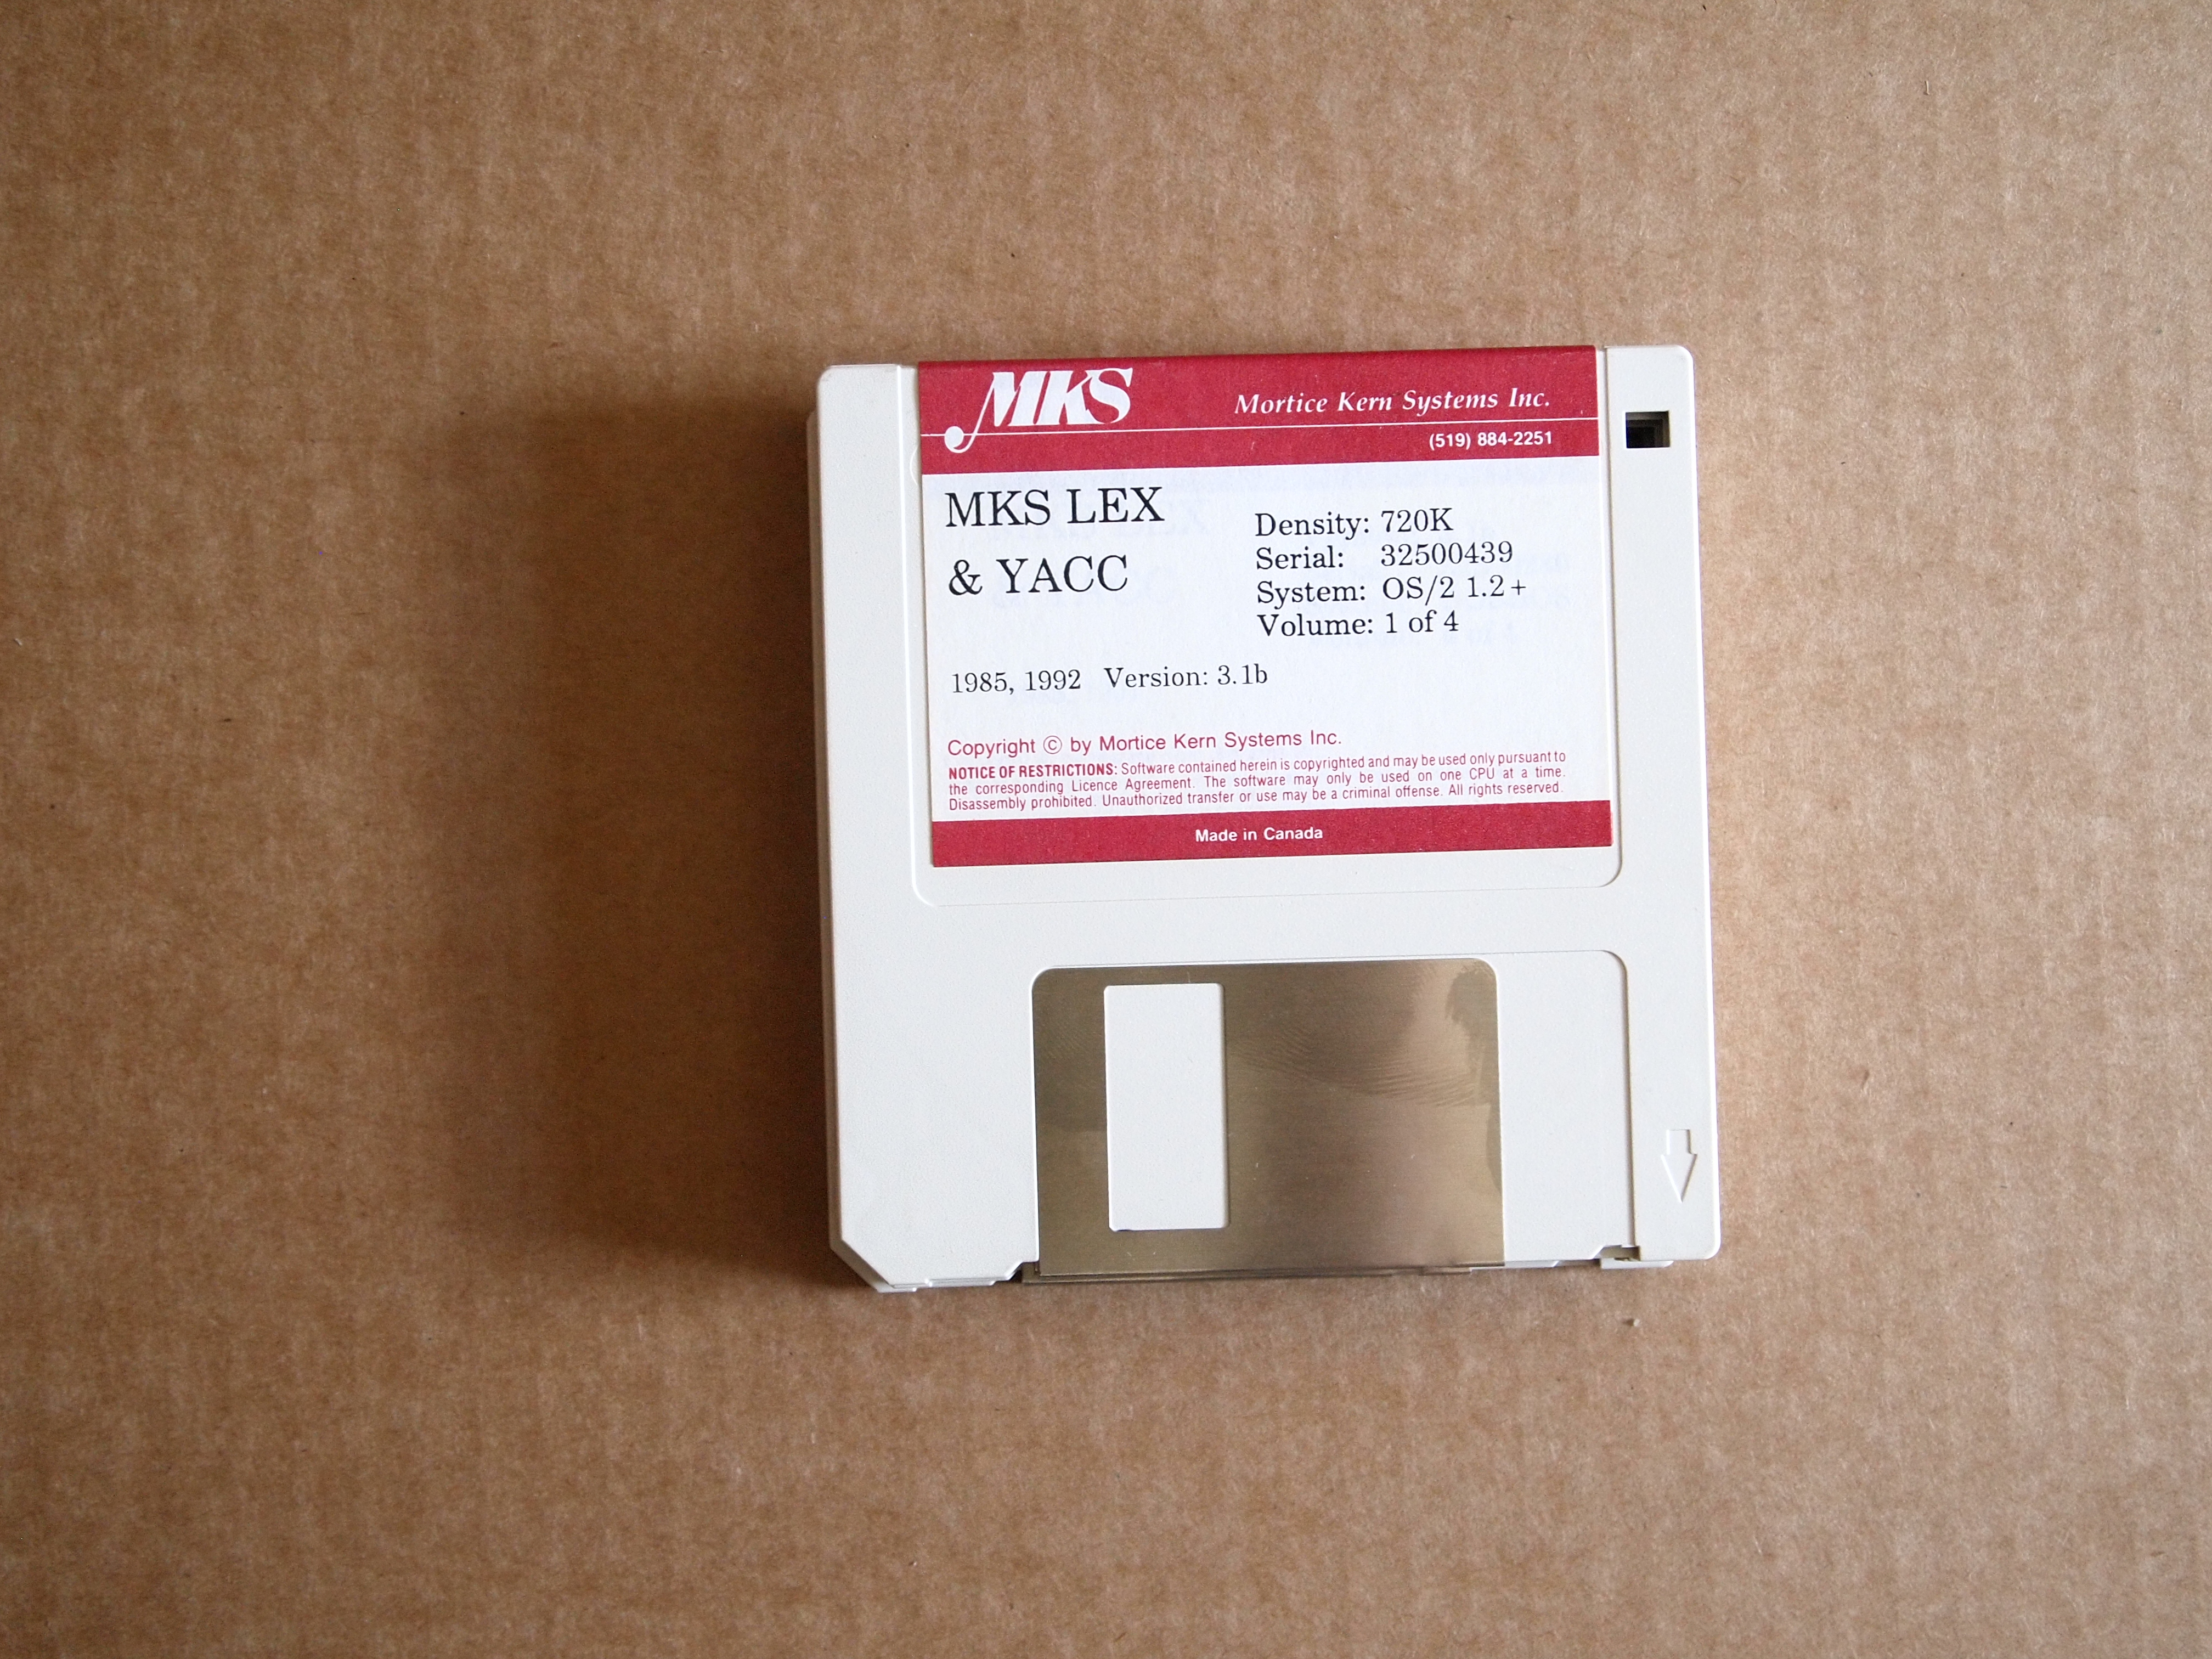 1990s presentation software